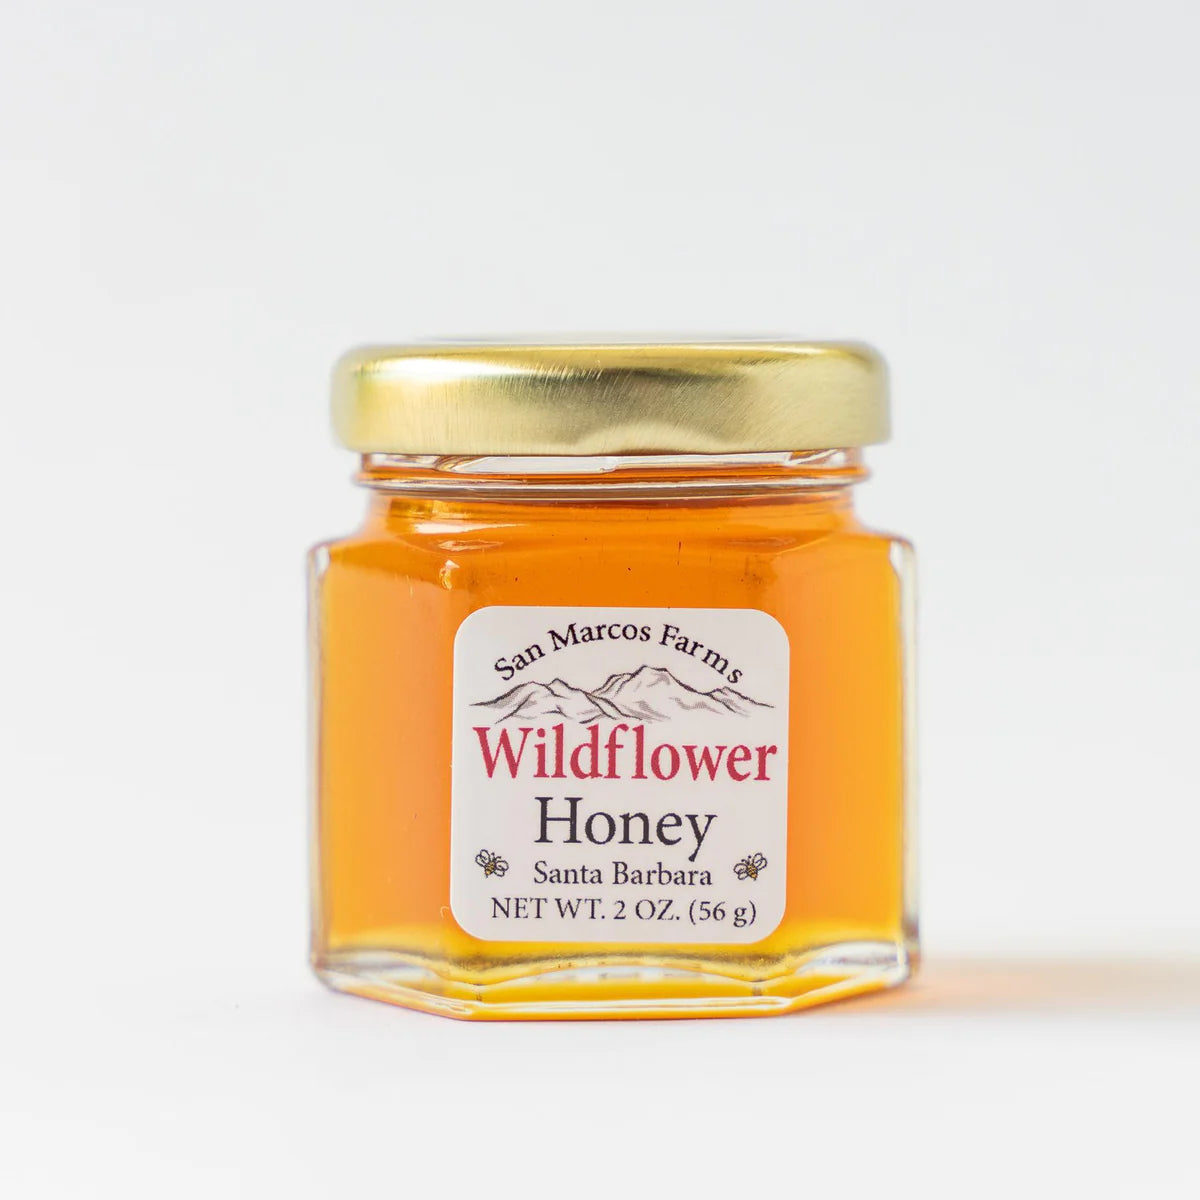 Santa Barbara wildflower honey mini size